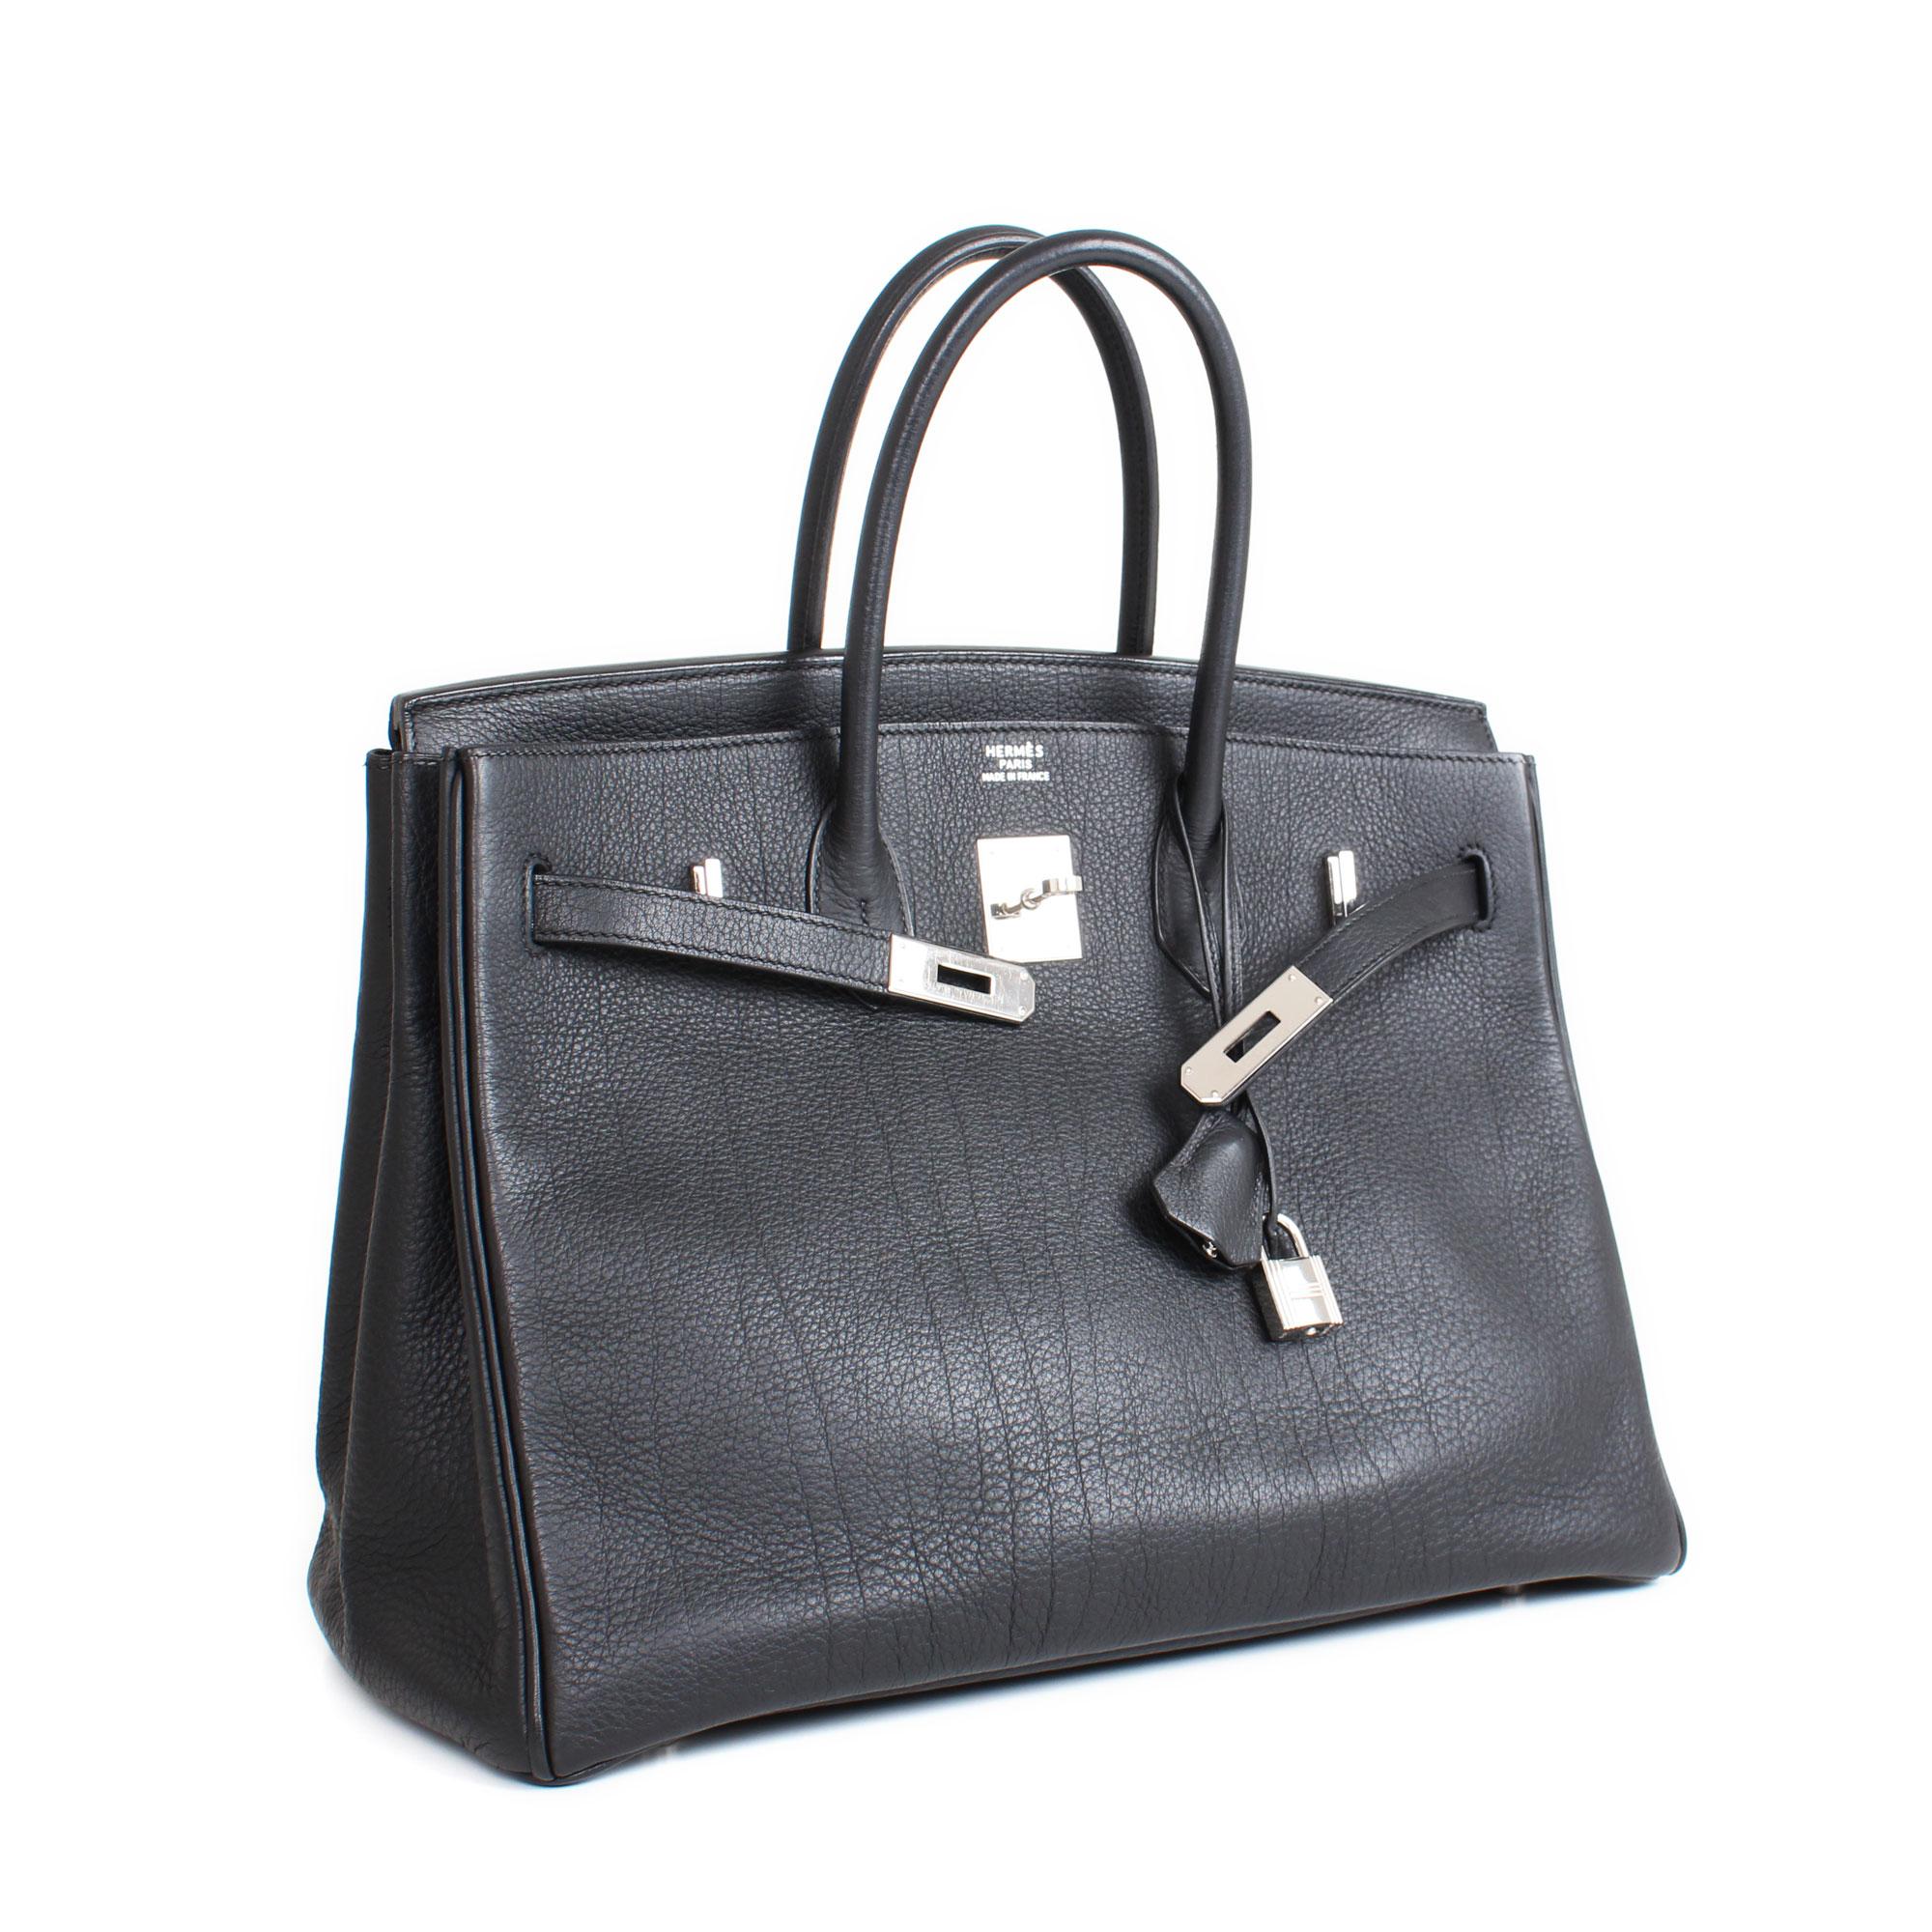 hermes black leather purse